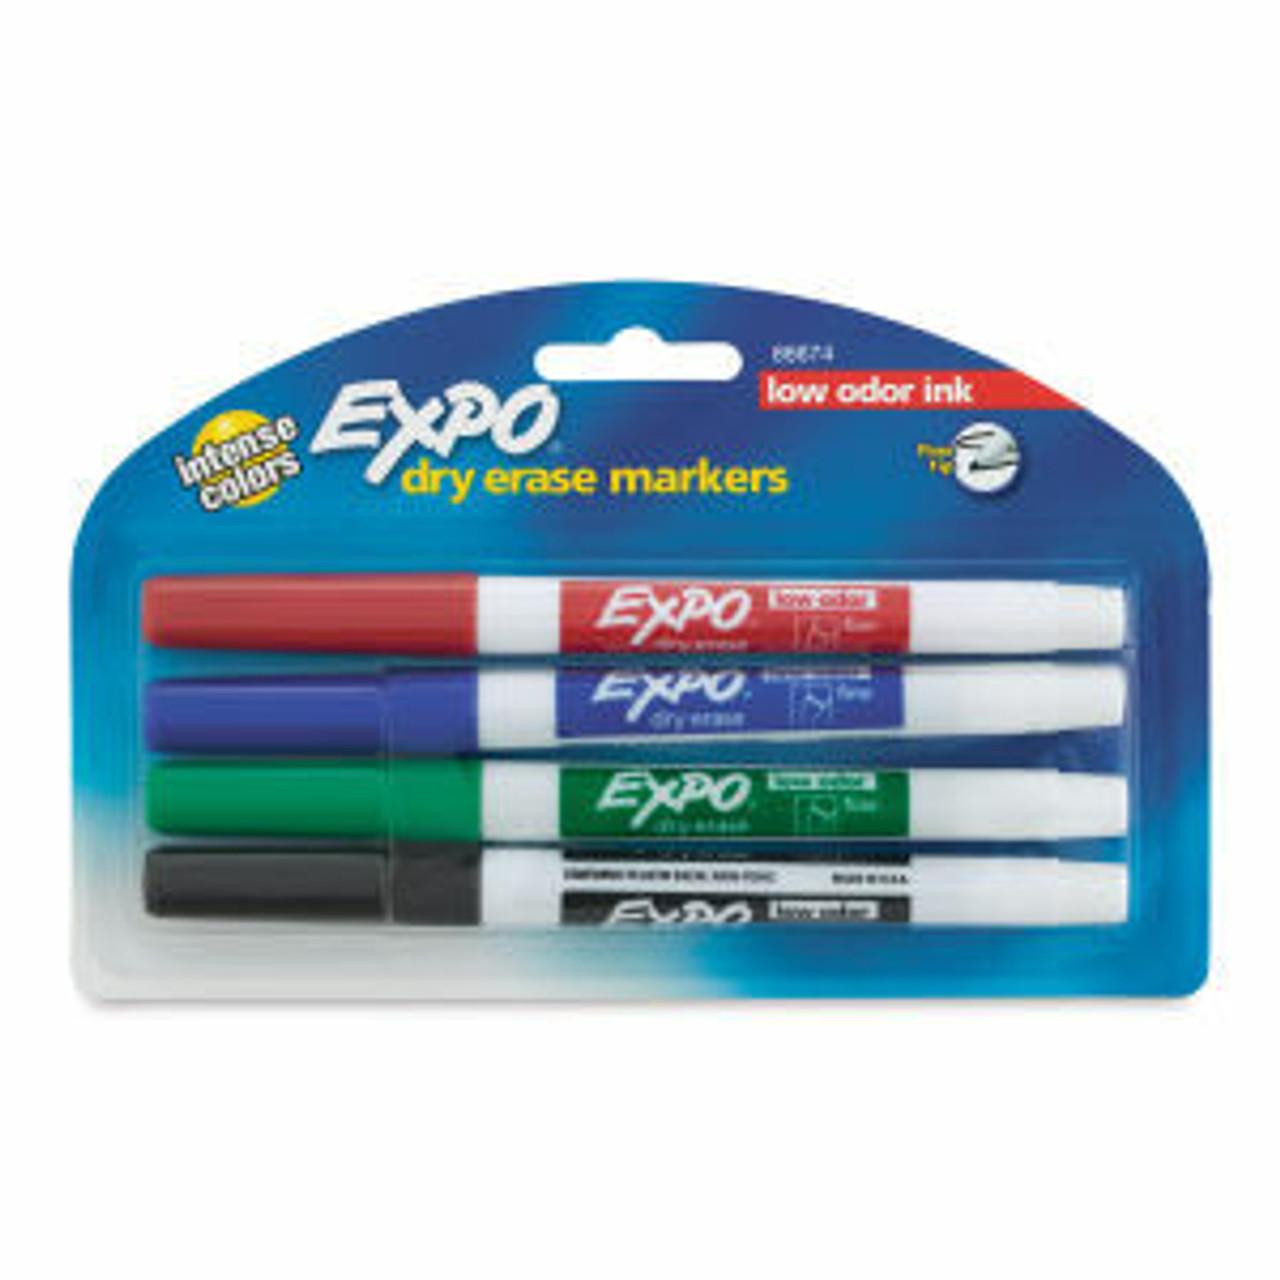 Odoriferous Marker-Making Kits : marker maker